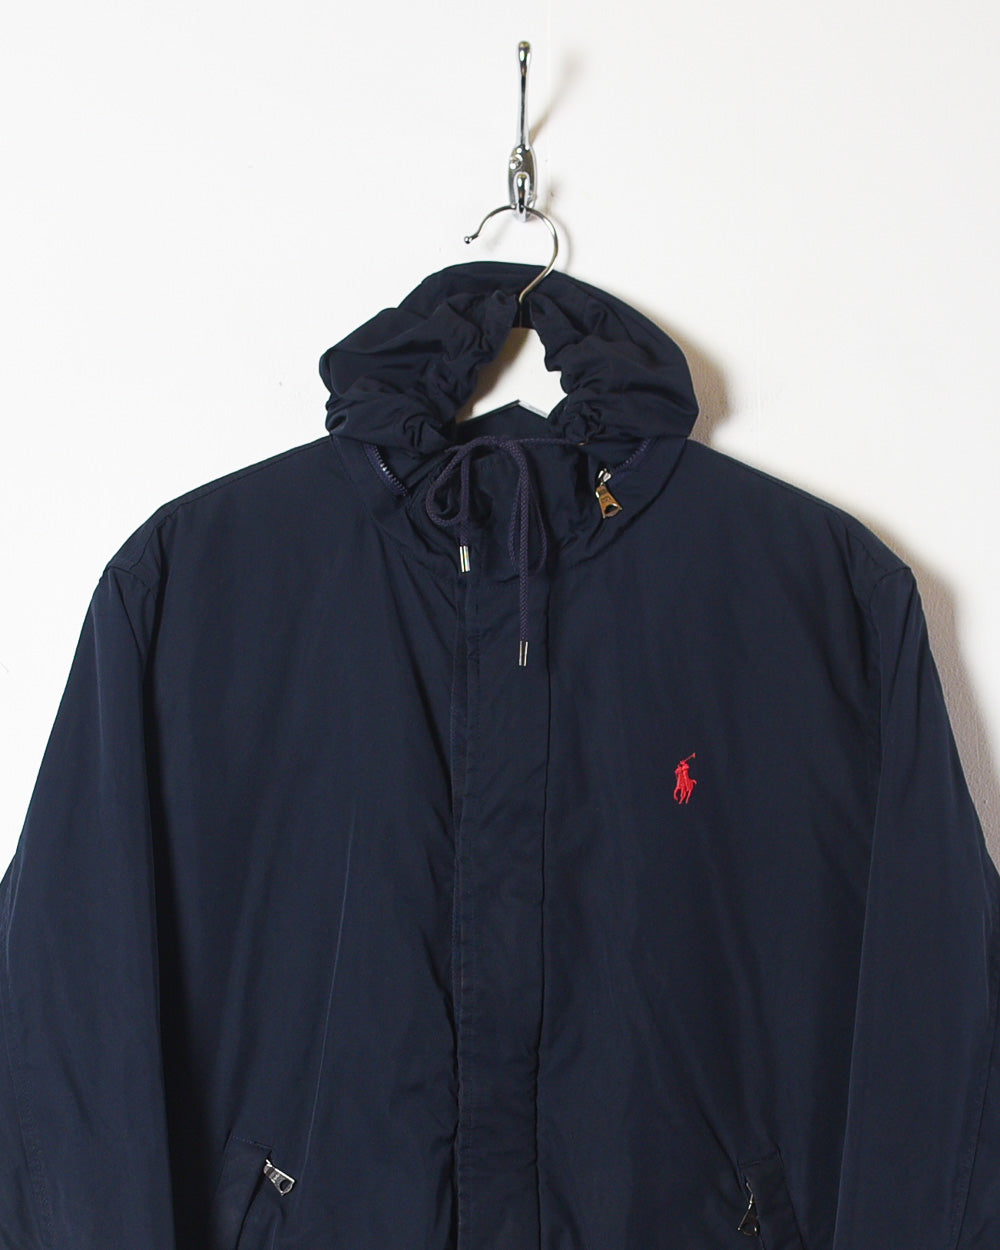 Navy Polo Ralph Lauren Hooded Fleece Lined Jacket - Small